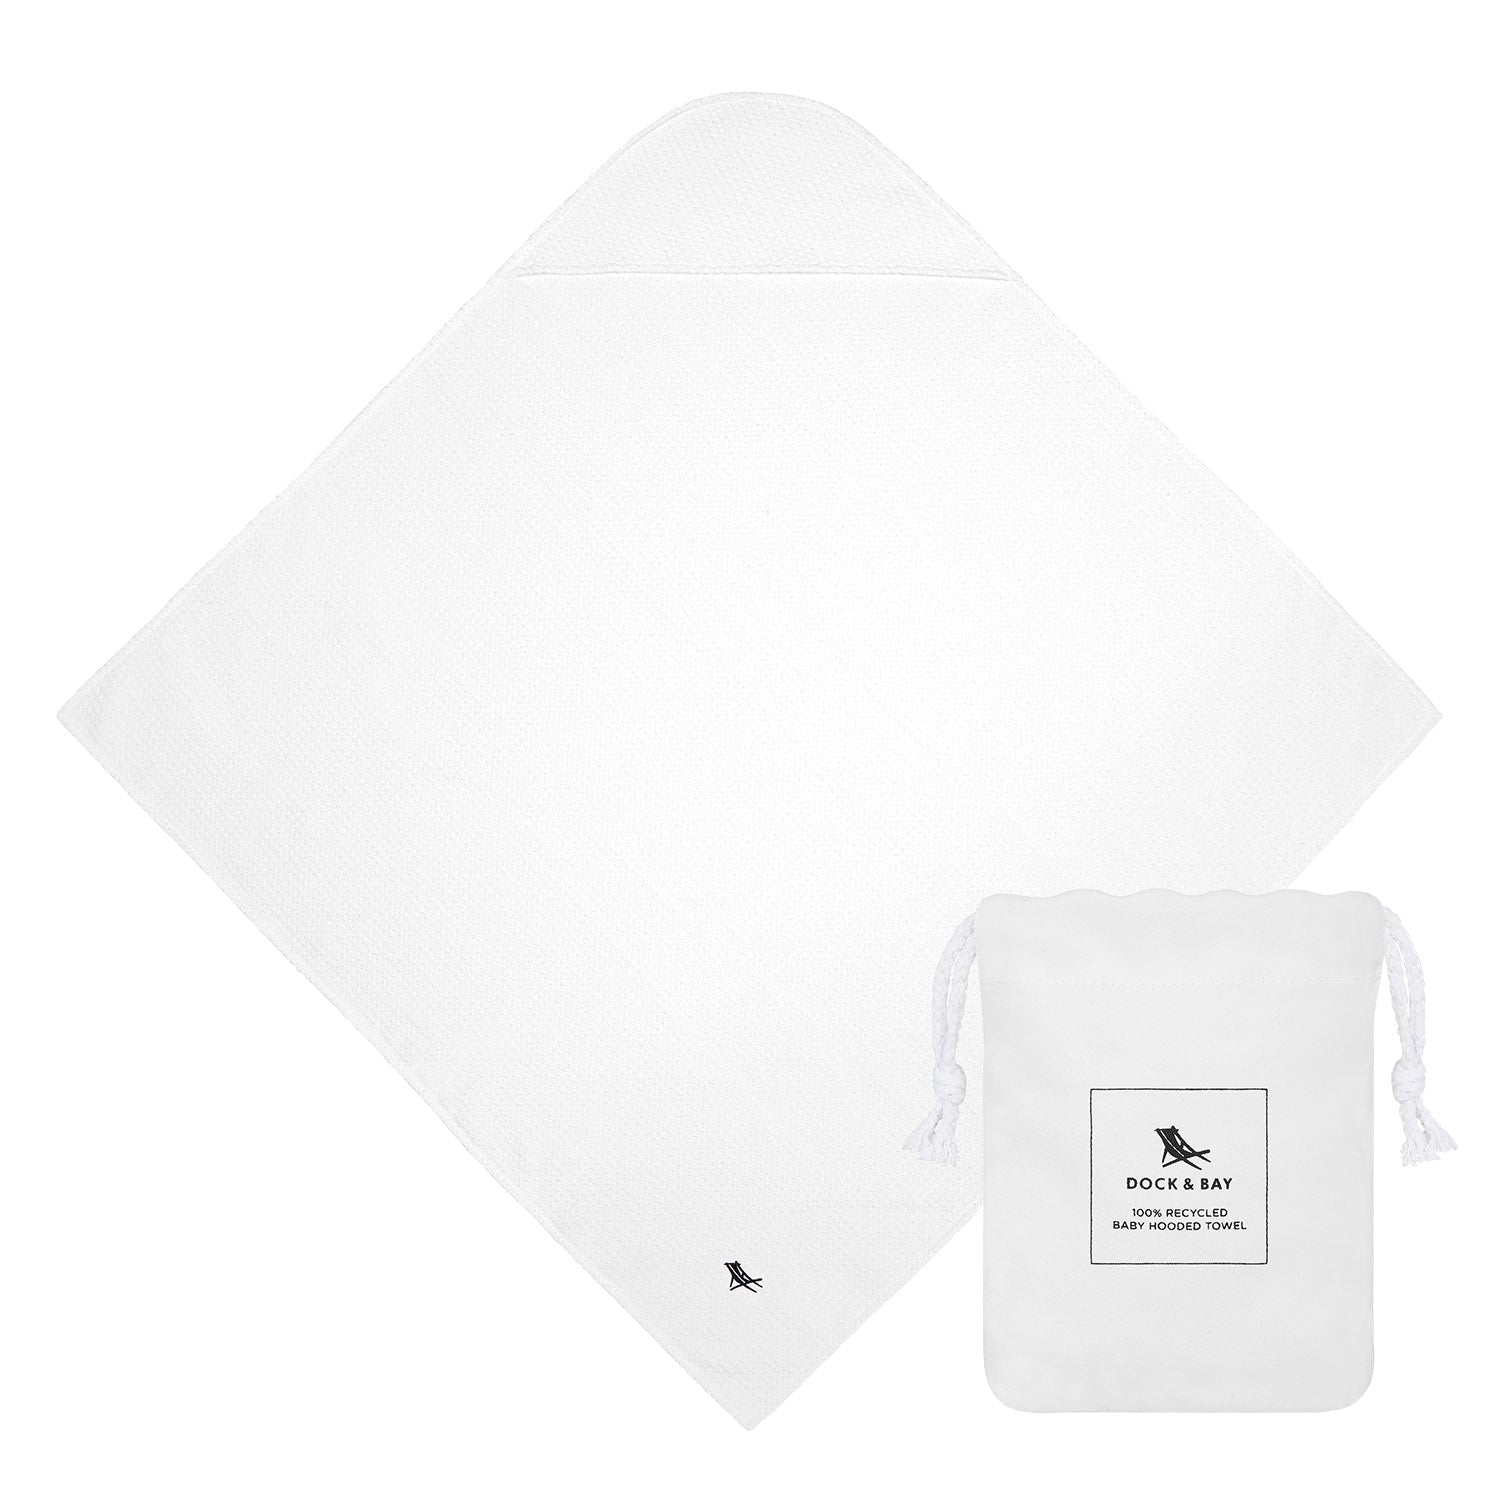 Baby Hooded Towel - Wishful White Gifts Dock & Bay   